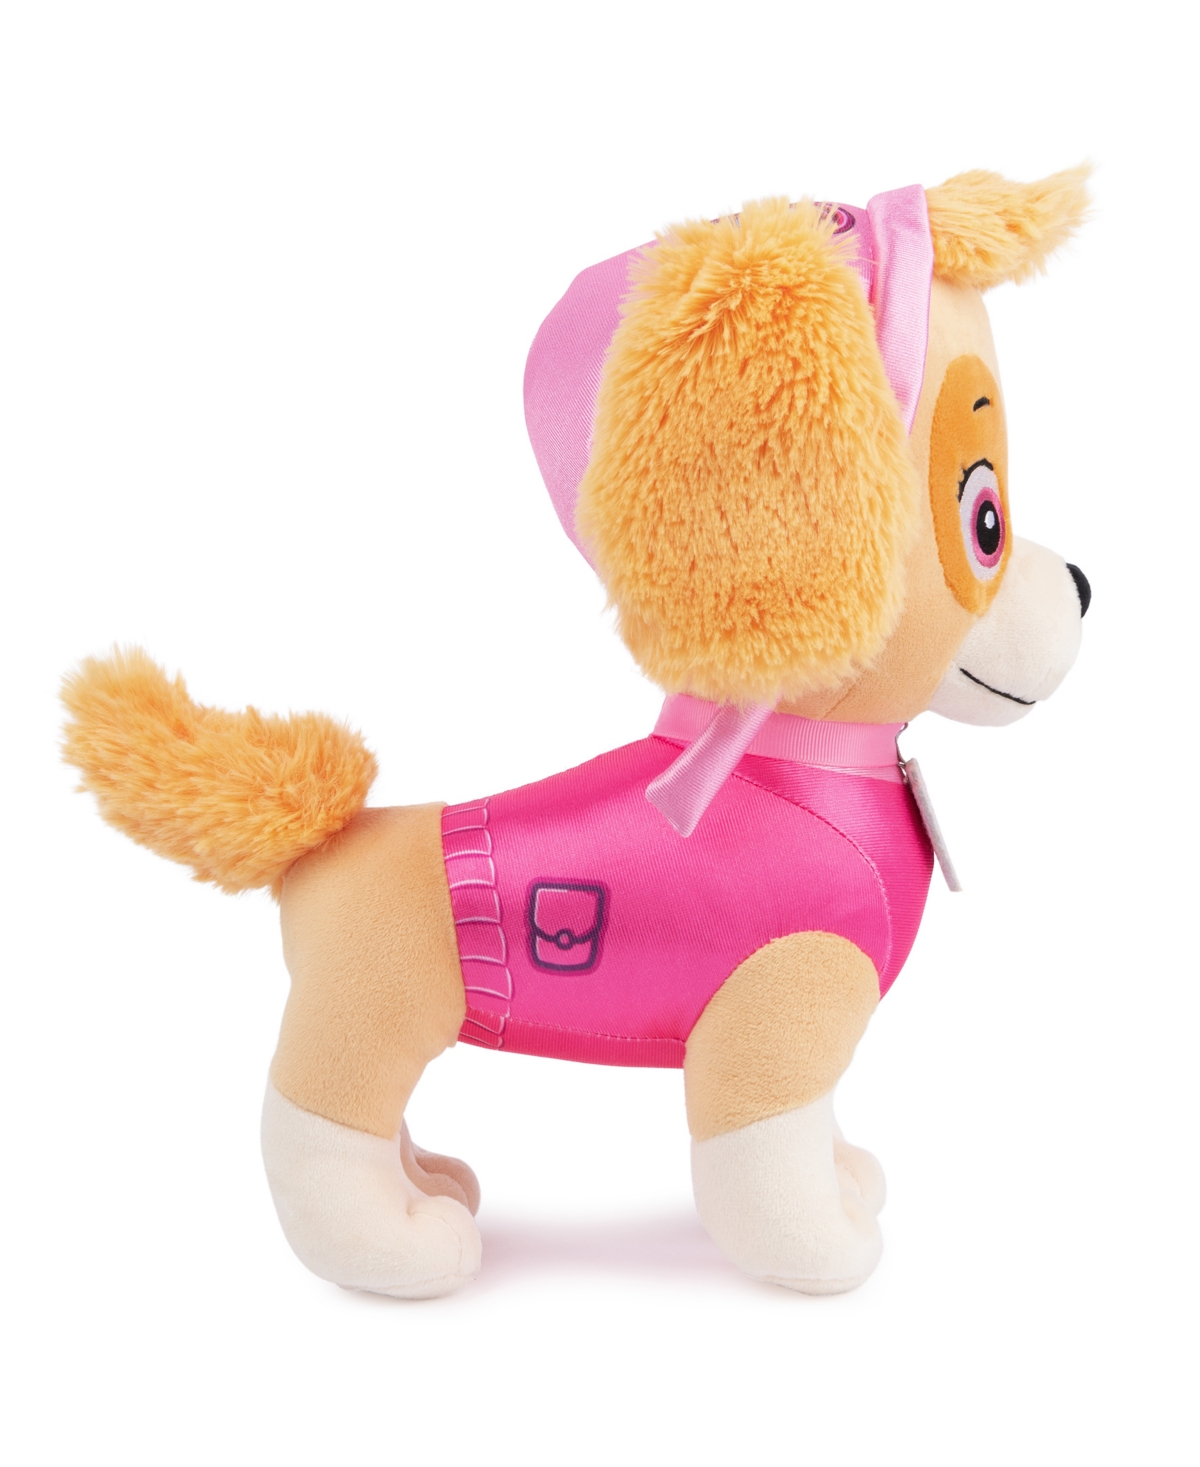 Shop Paw Patrol Skye In Heroic Standing Position Premium Stuffed Animal Plush Toy In Multi-color